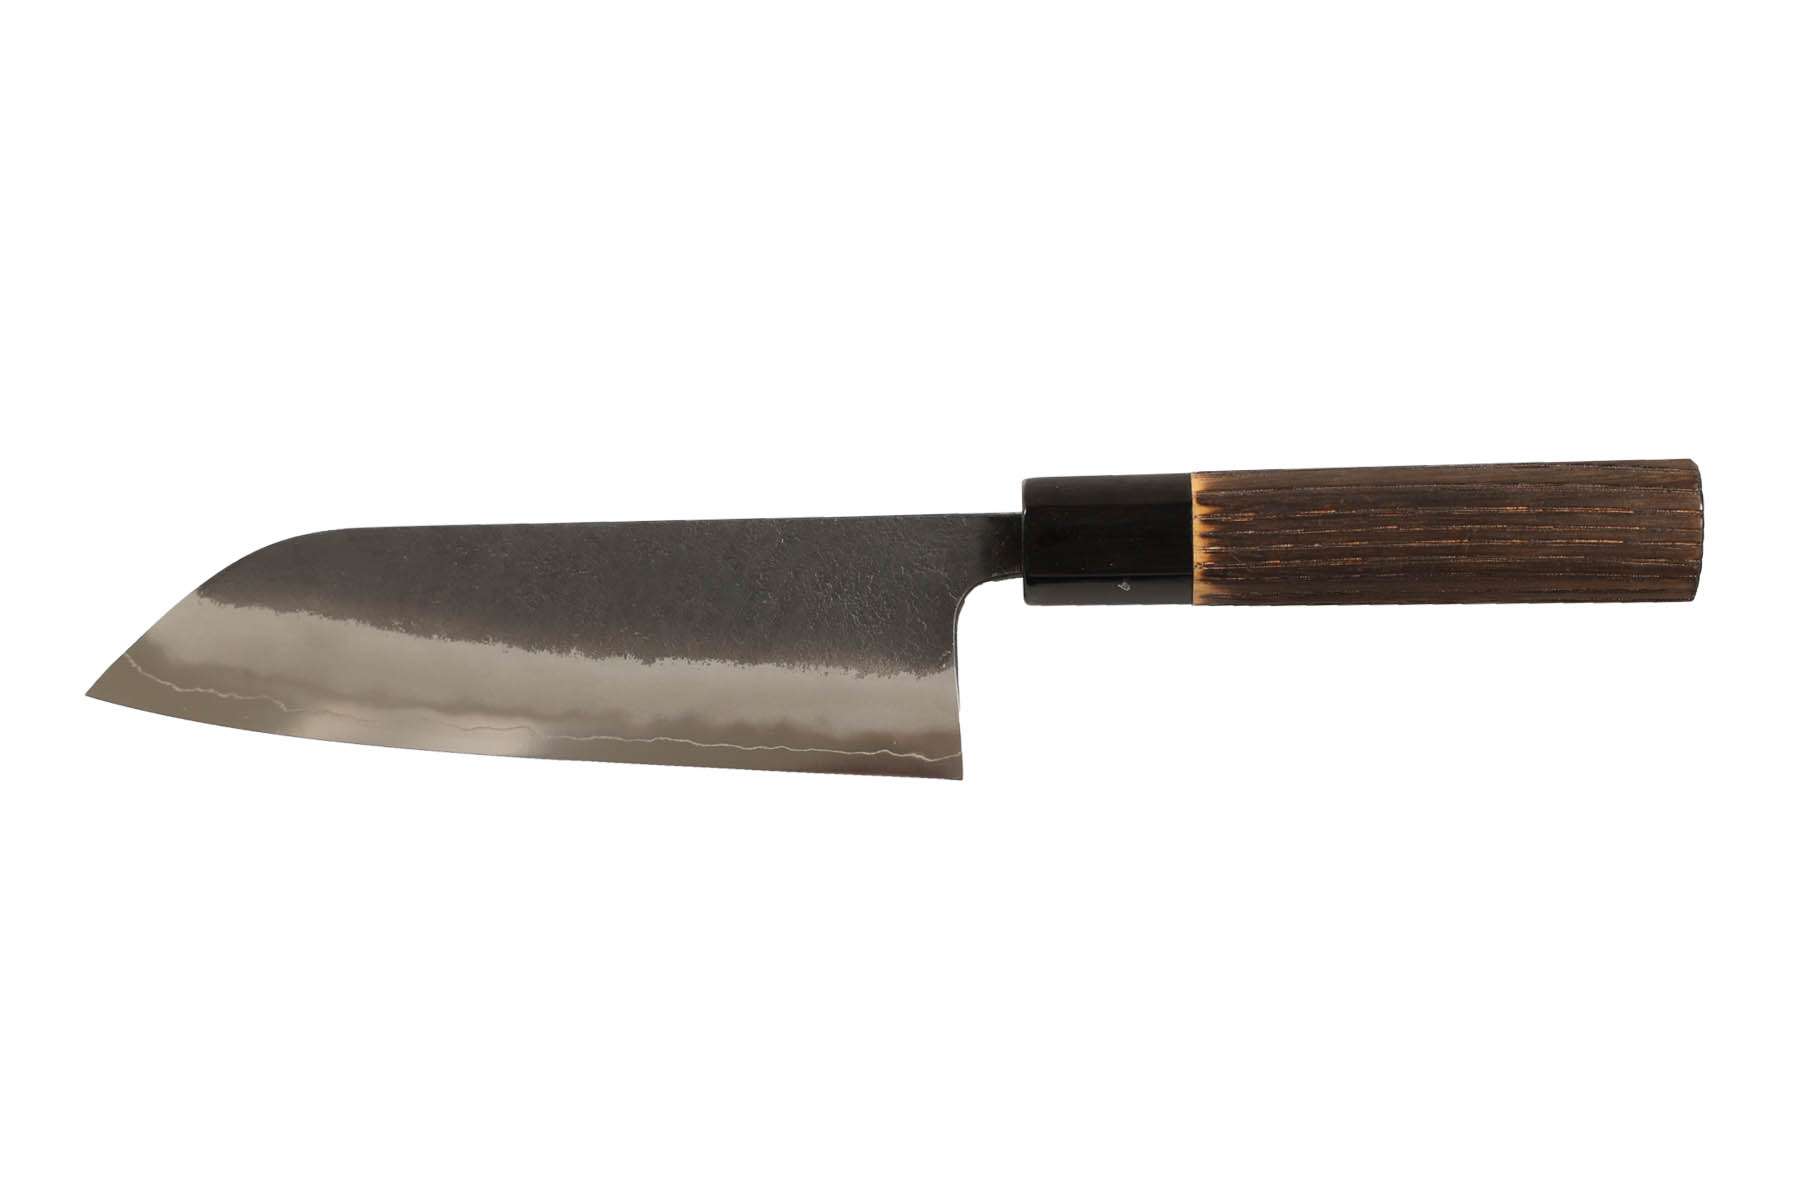 Couteau japonais artisanal de Masashi Yamamoto - Couteau santoku 18 cm